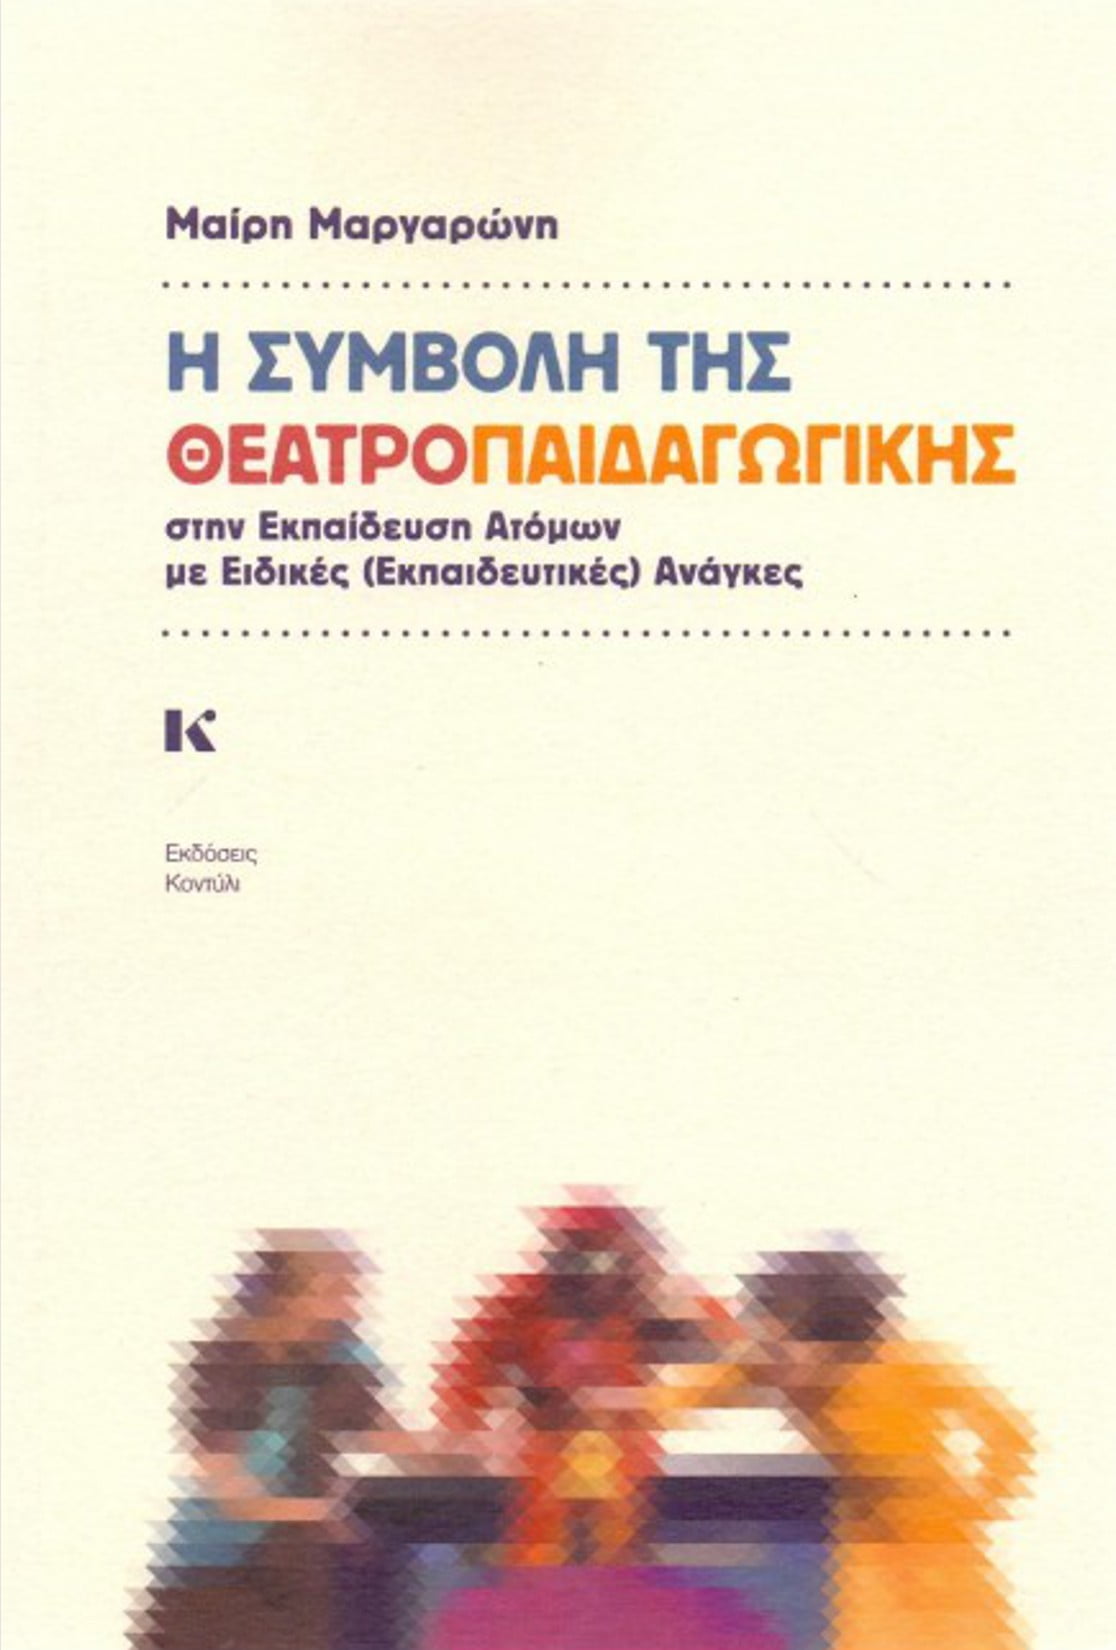 Book cover by Despoina Vafeidou for Kondyli Press